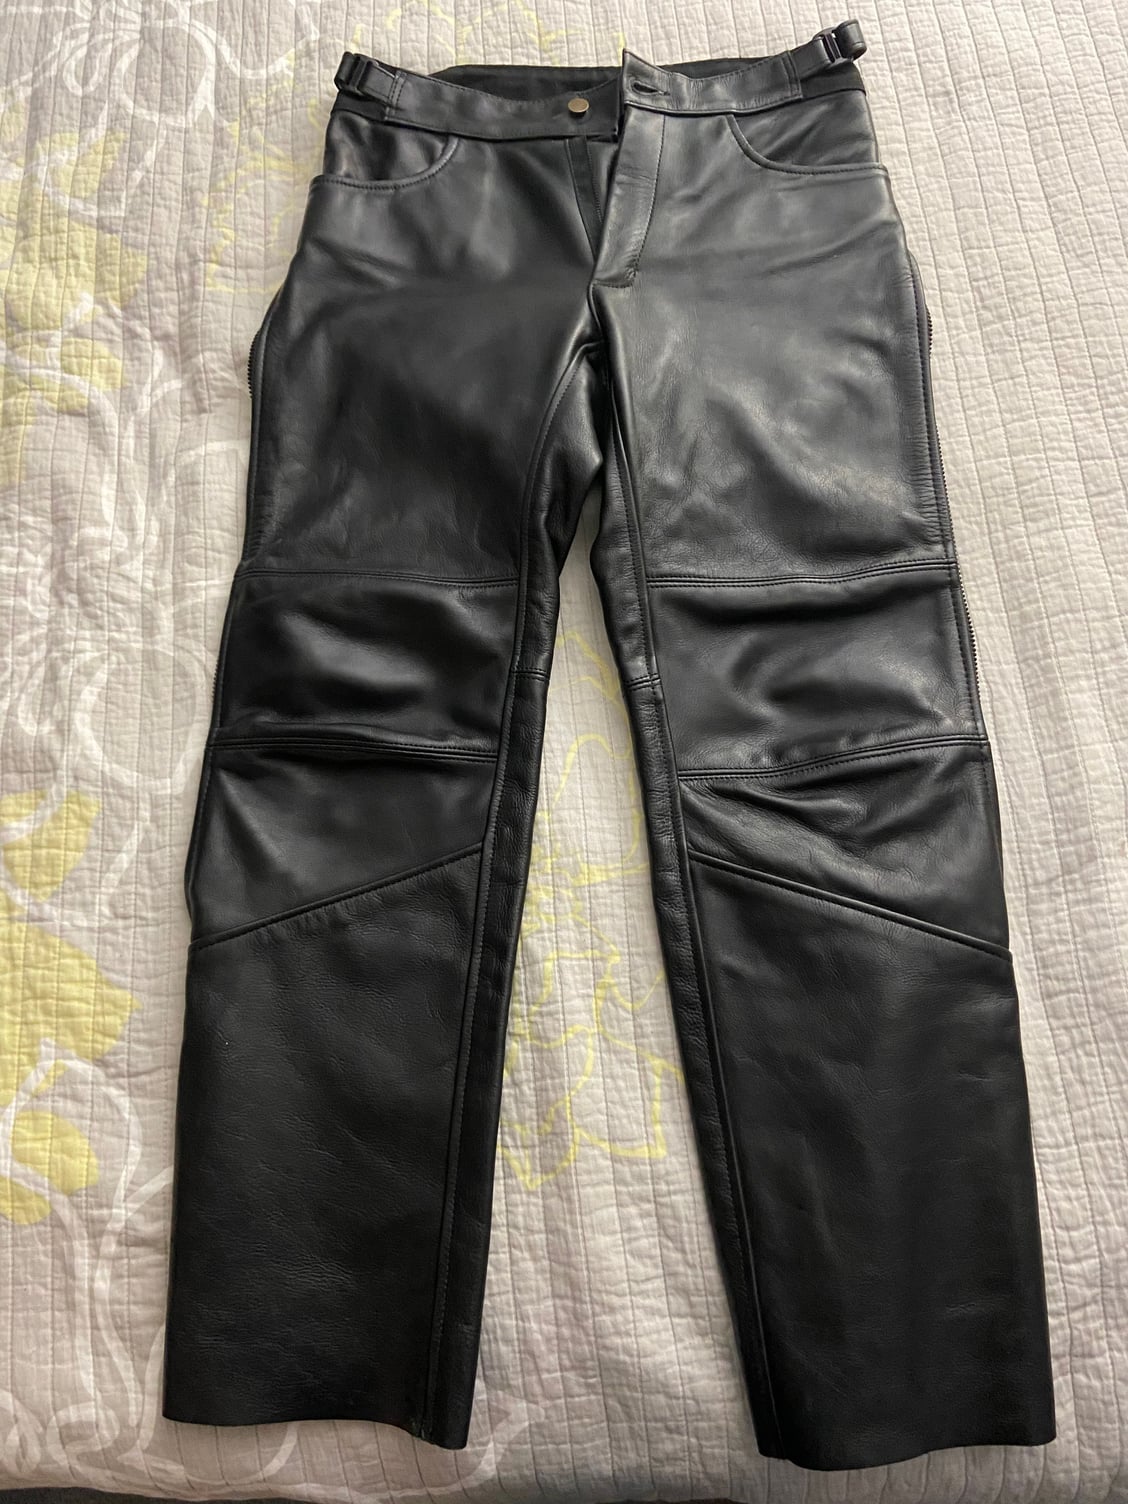 Men’s Vanson leather pants - Harley Davidson Forums